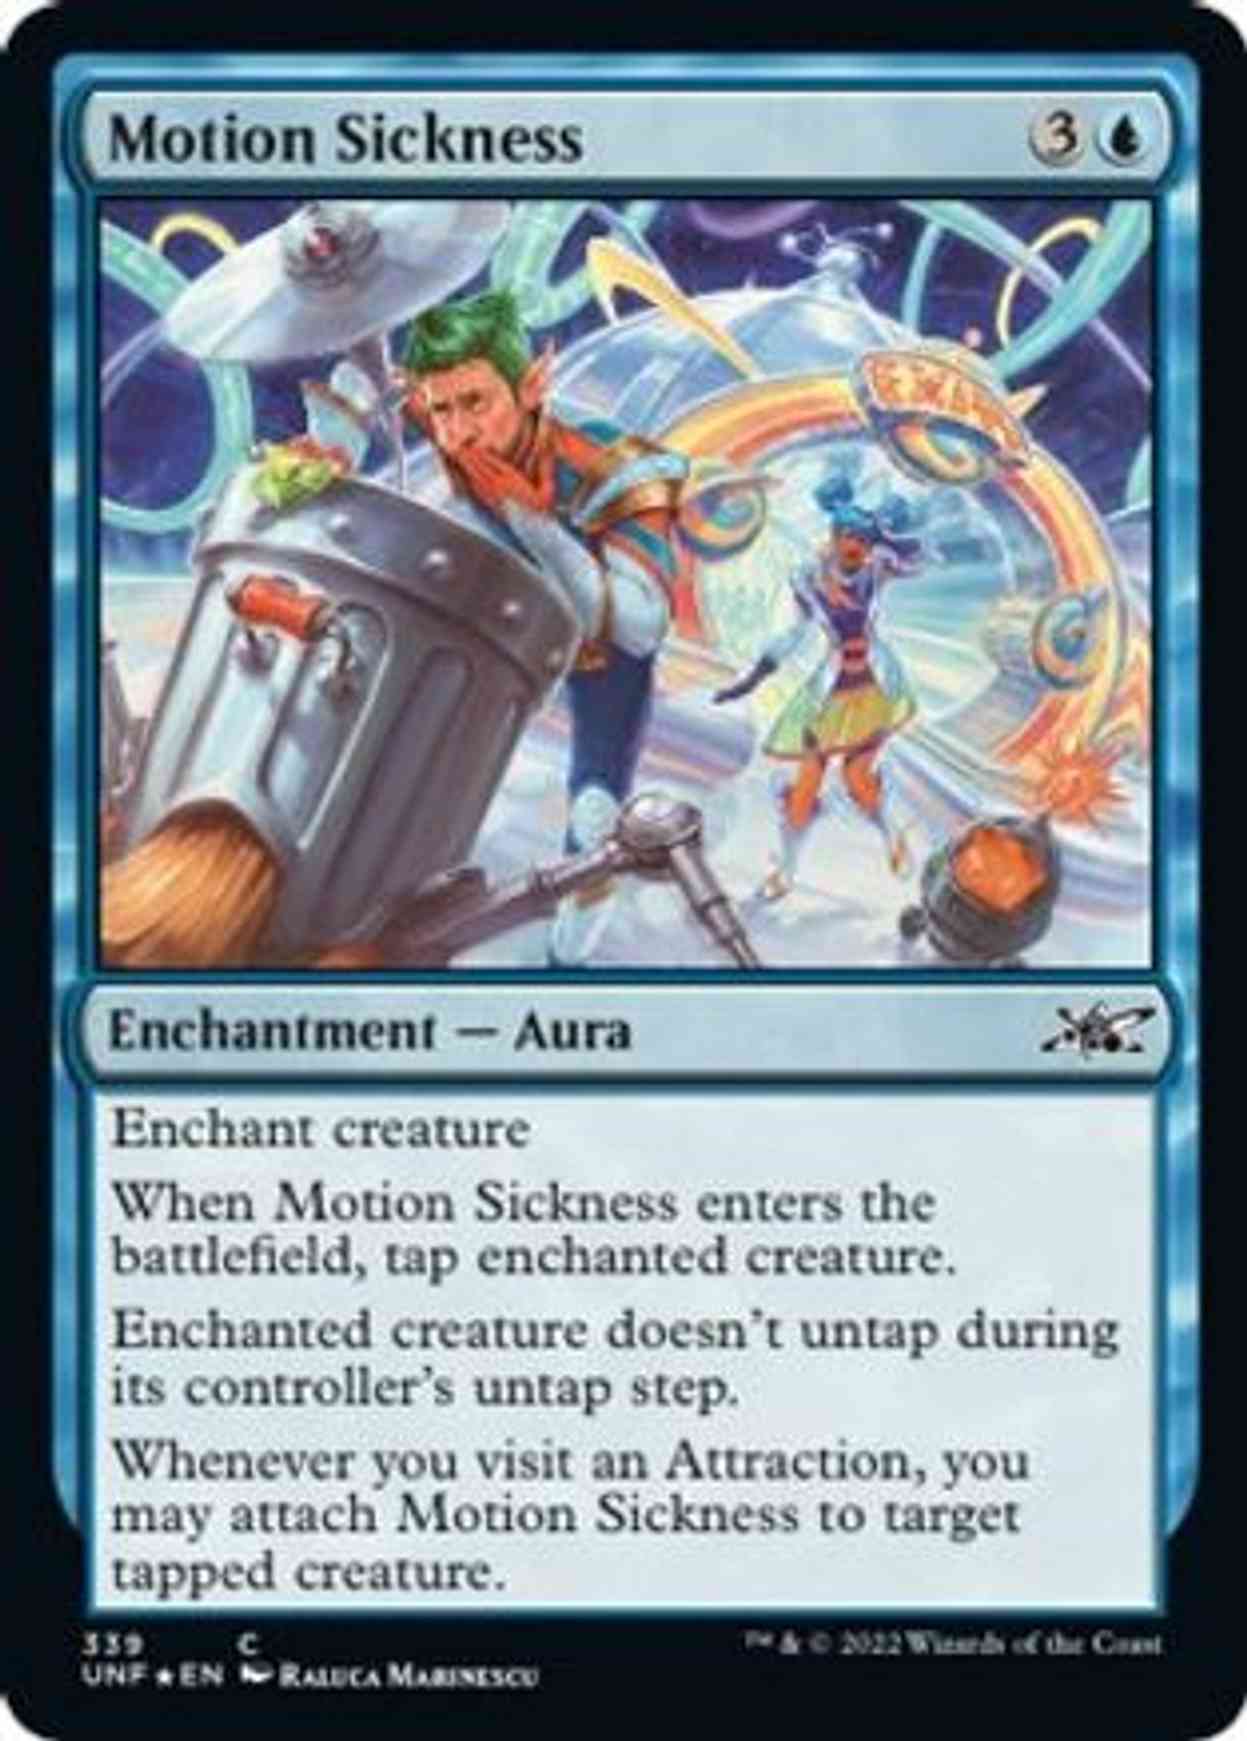 Motion Sickness (Galaxy Foil) magic card front